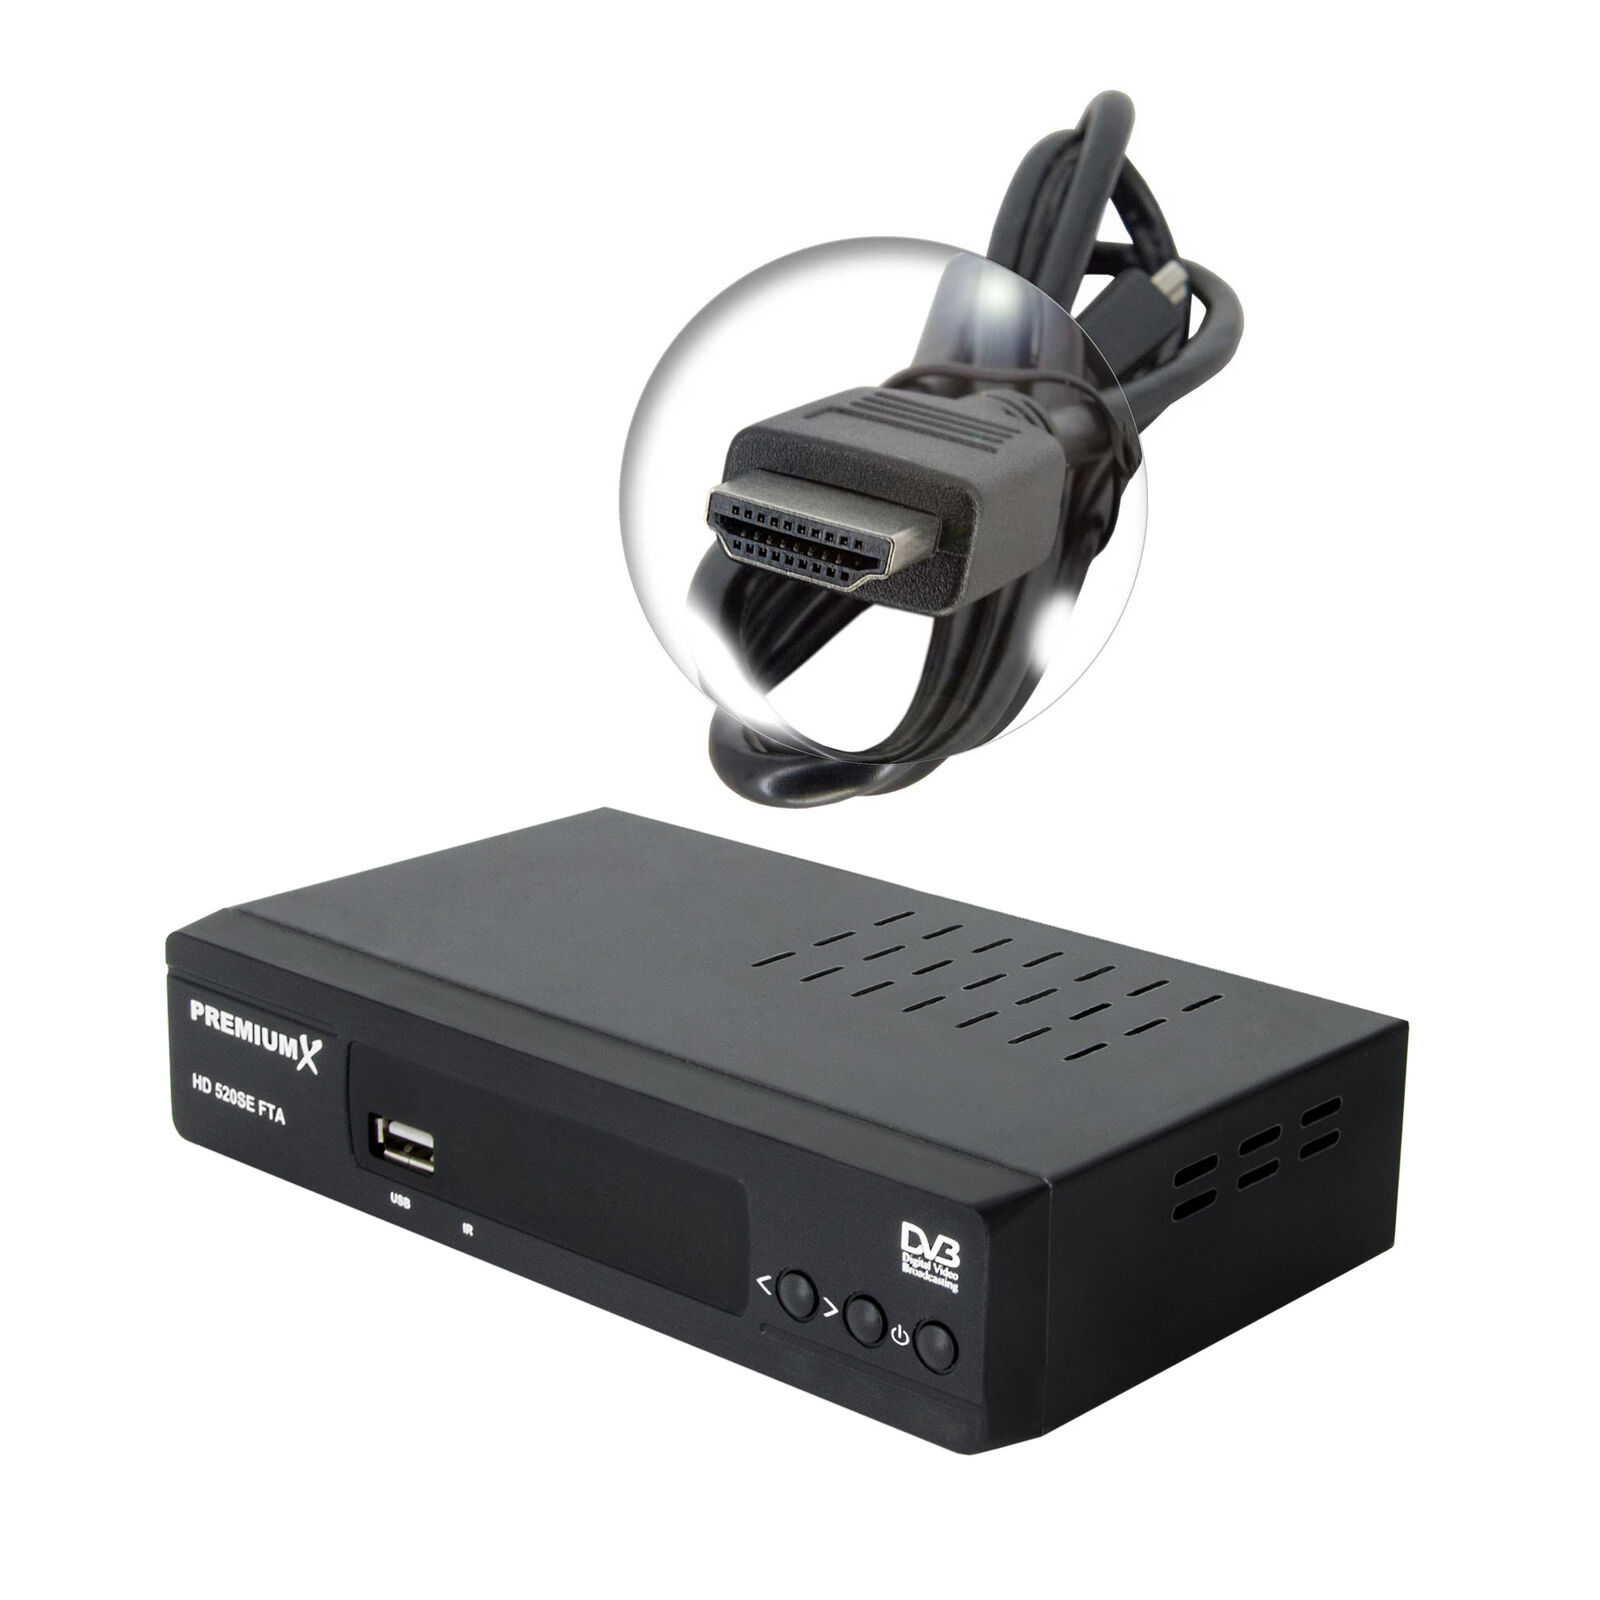 PremiumX 520SE SAT TV Receiver DVB-S2 USB SCART HDMI Satellitenreceiver FullHD